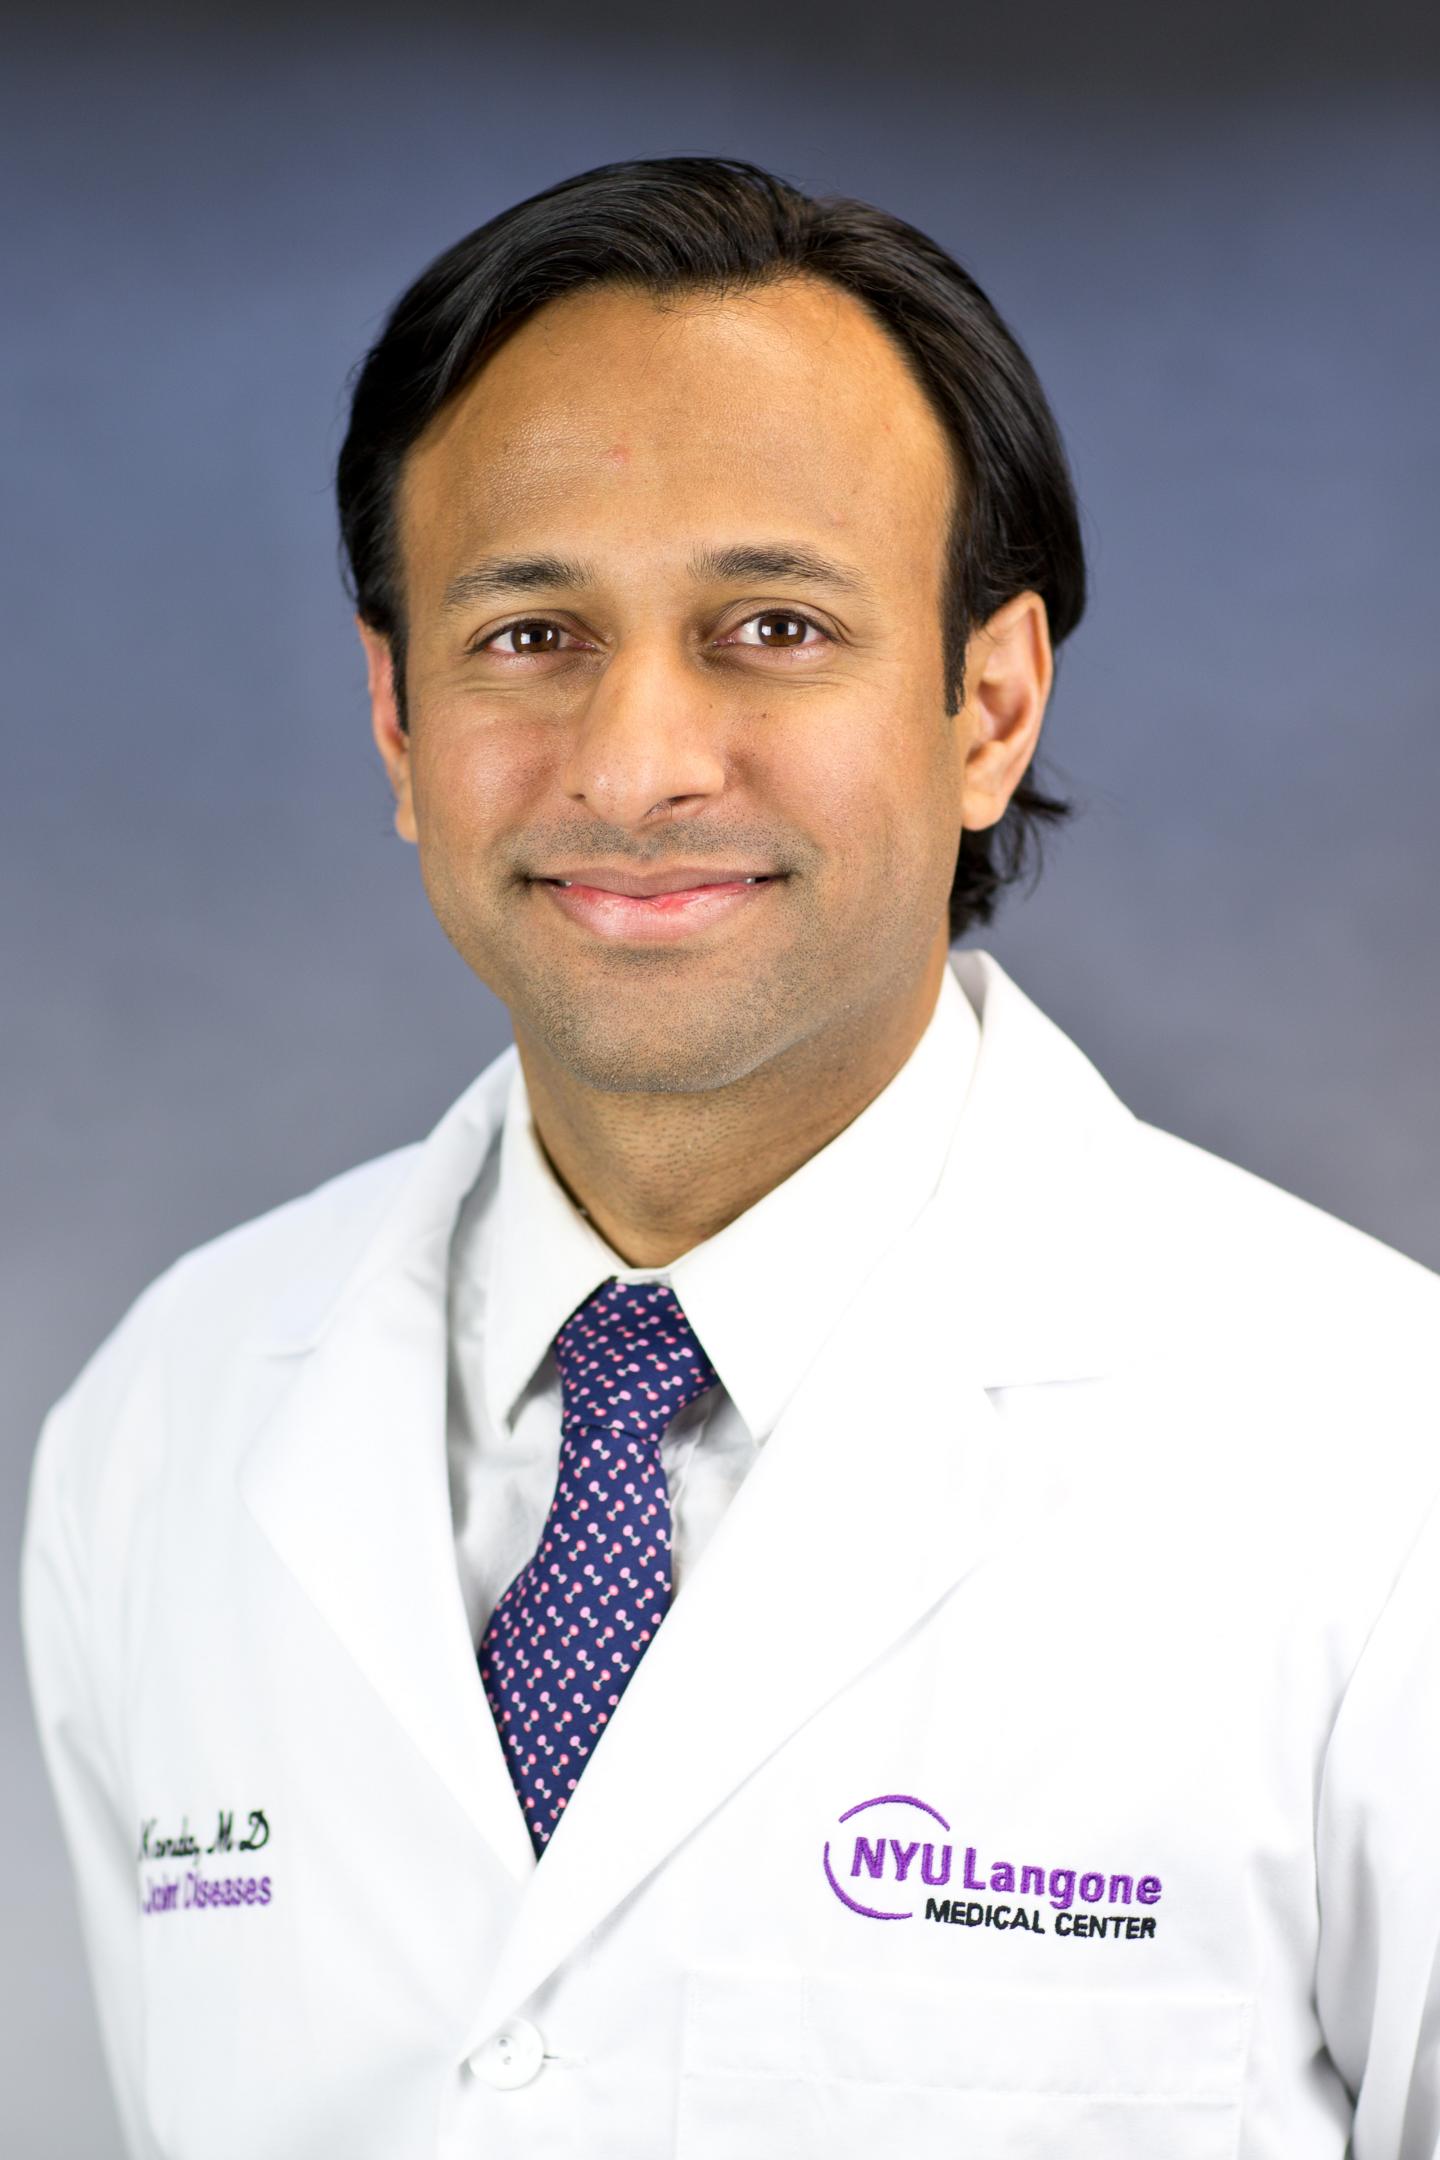 Sanjit R. Konda, NYU School of Medicine